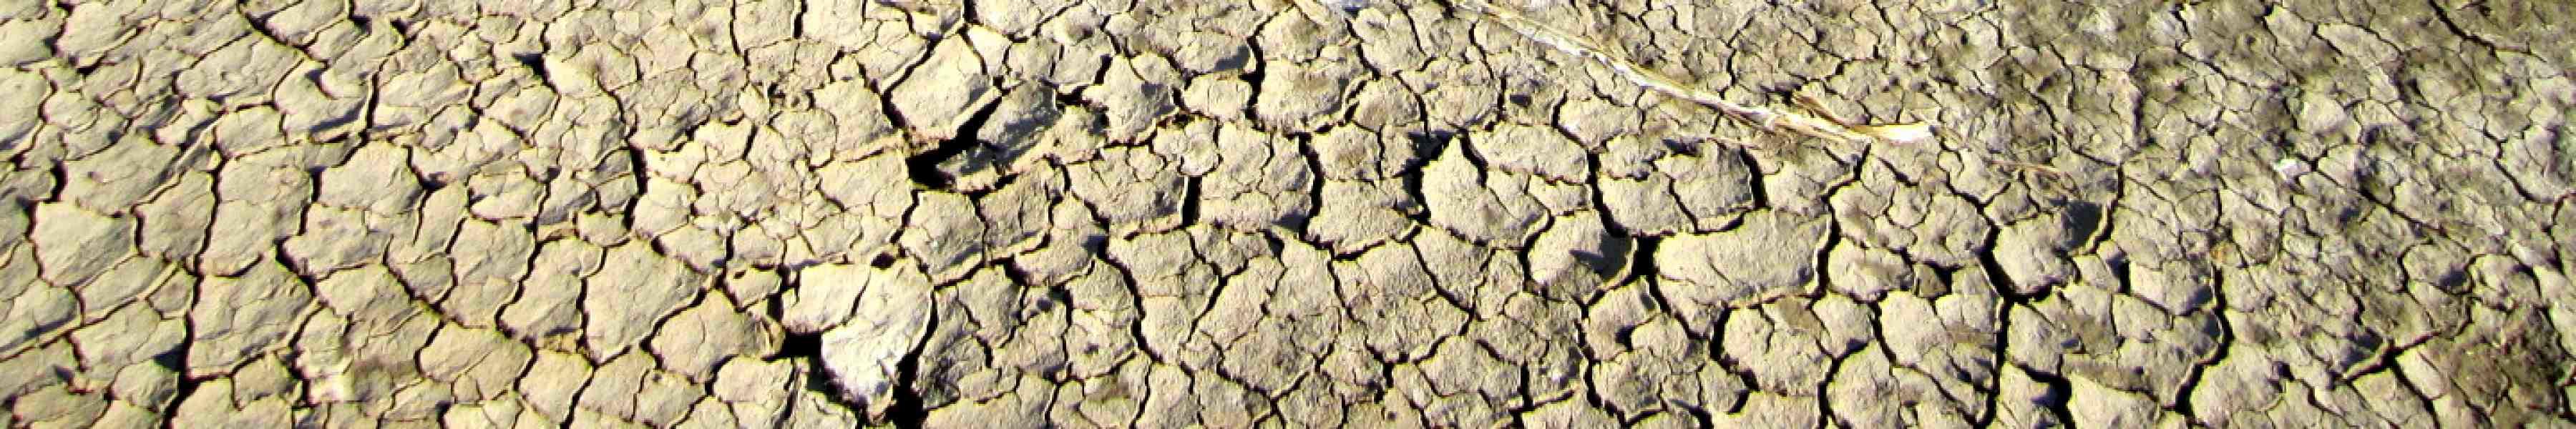 Drought Header